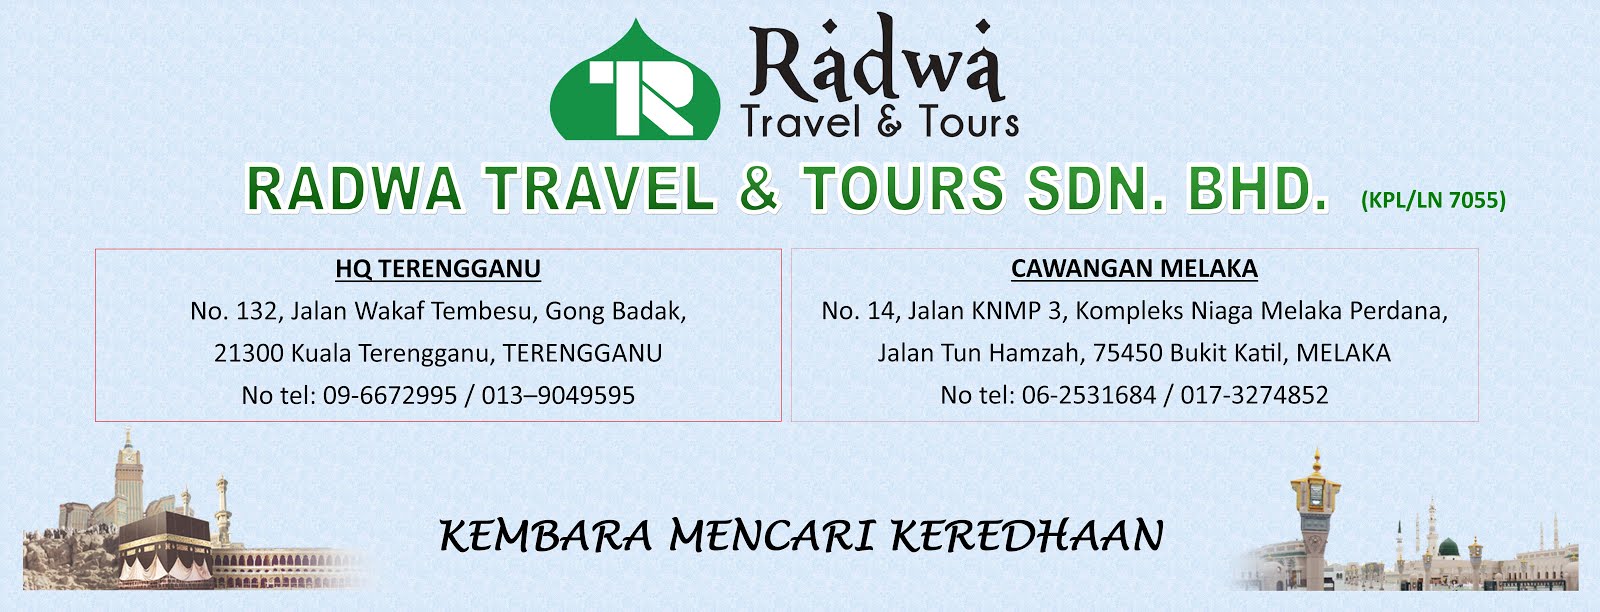 Radwa Travel & Tours Sdn Bhd